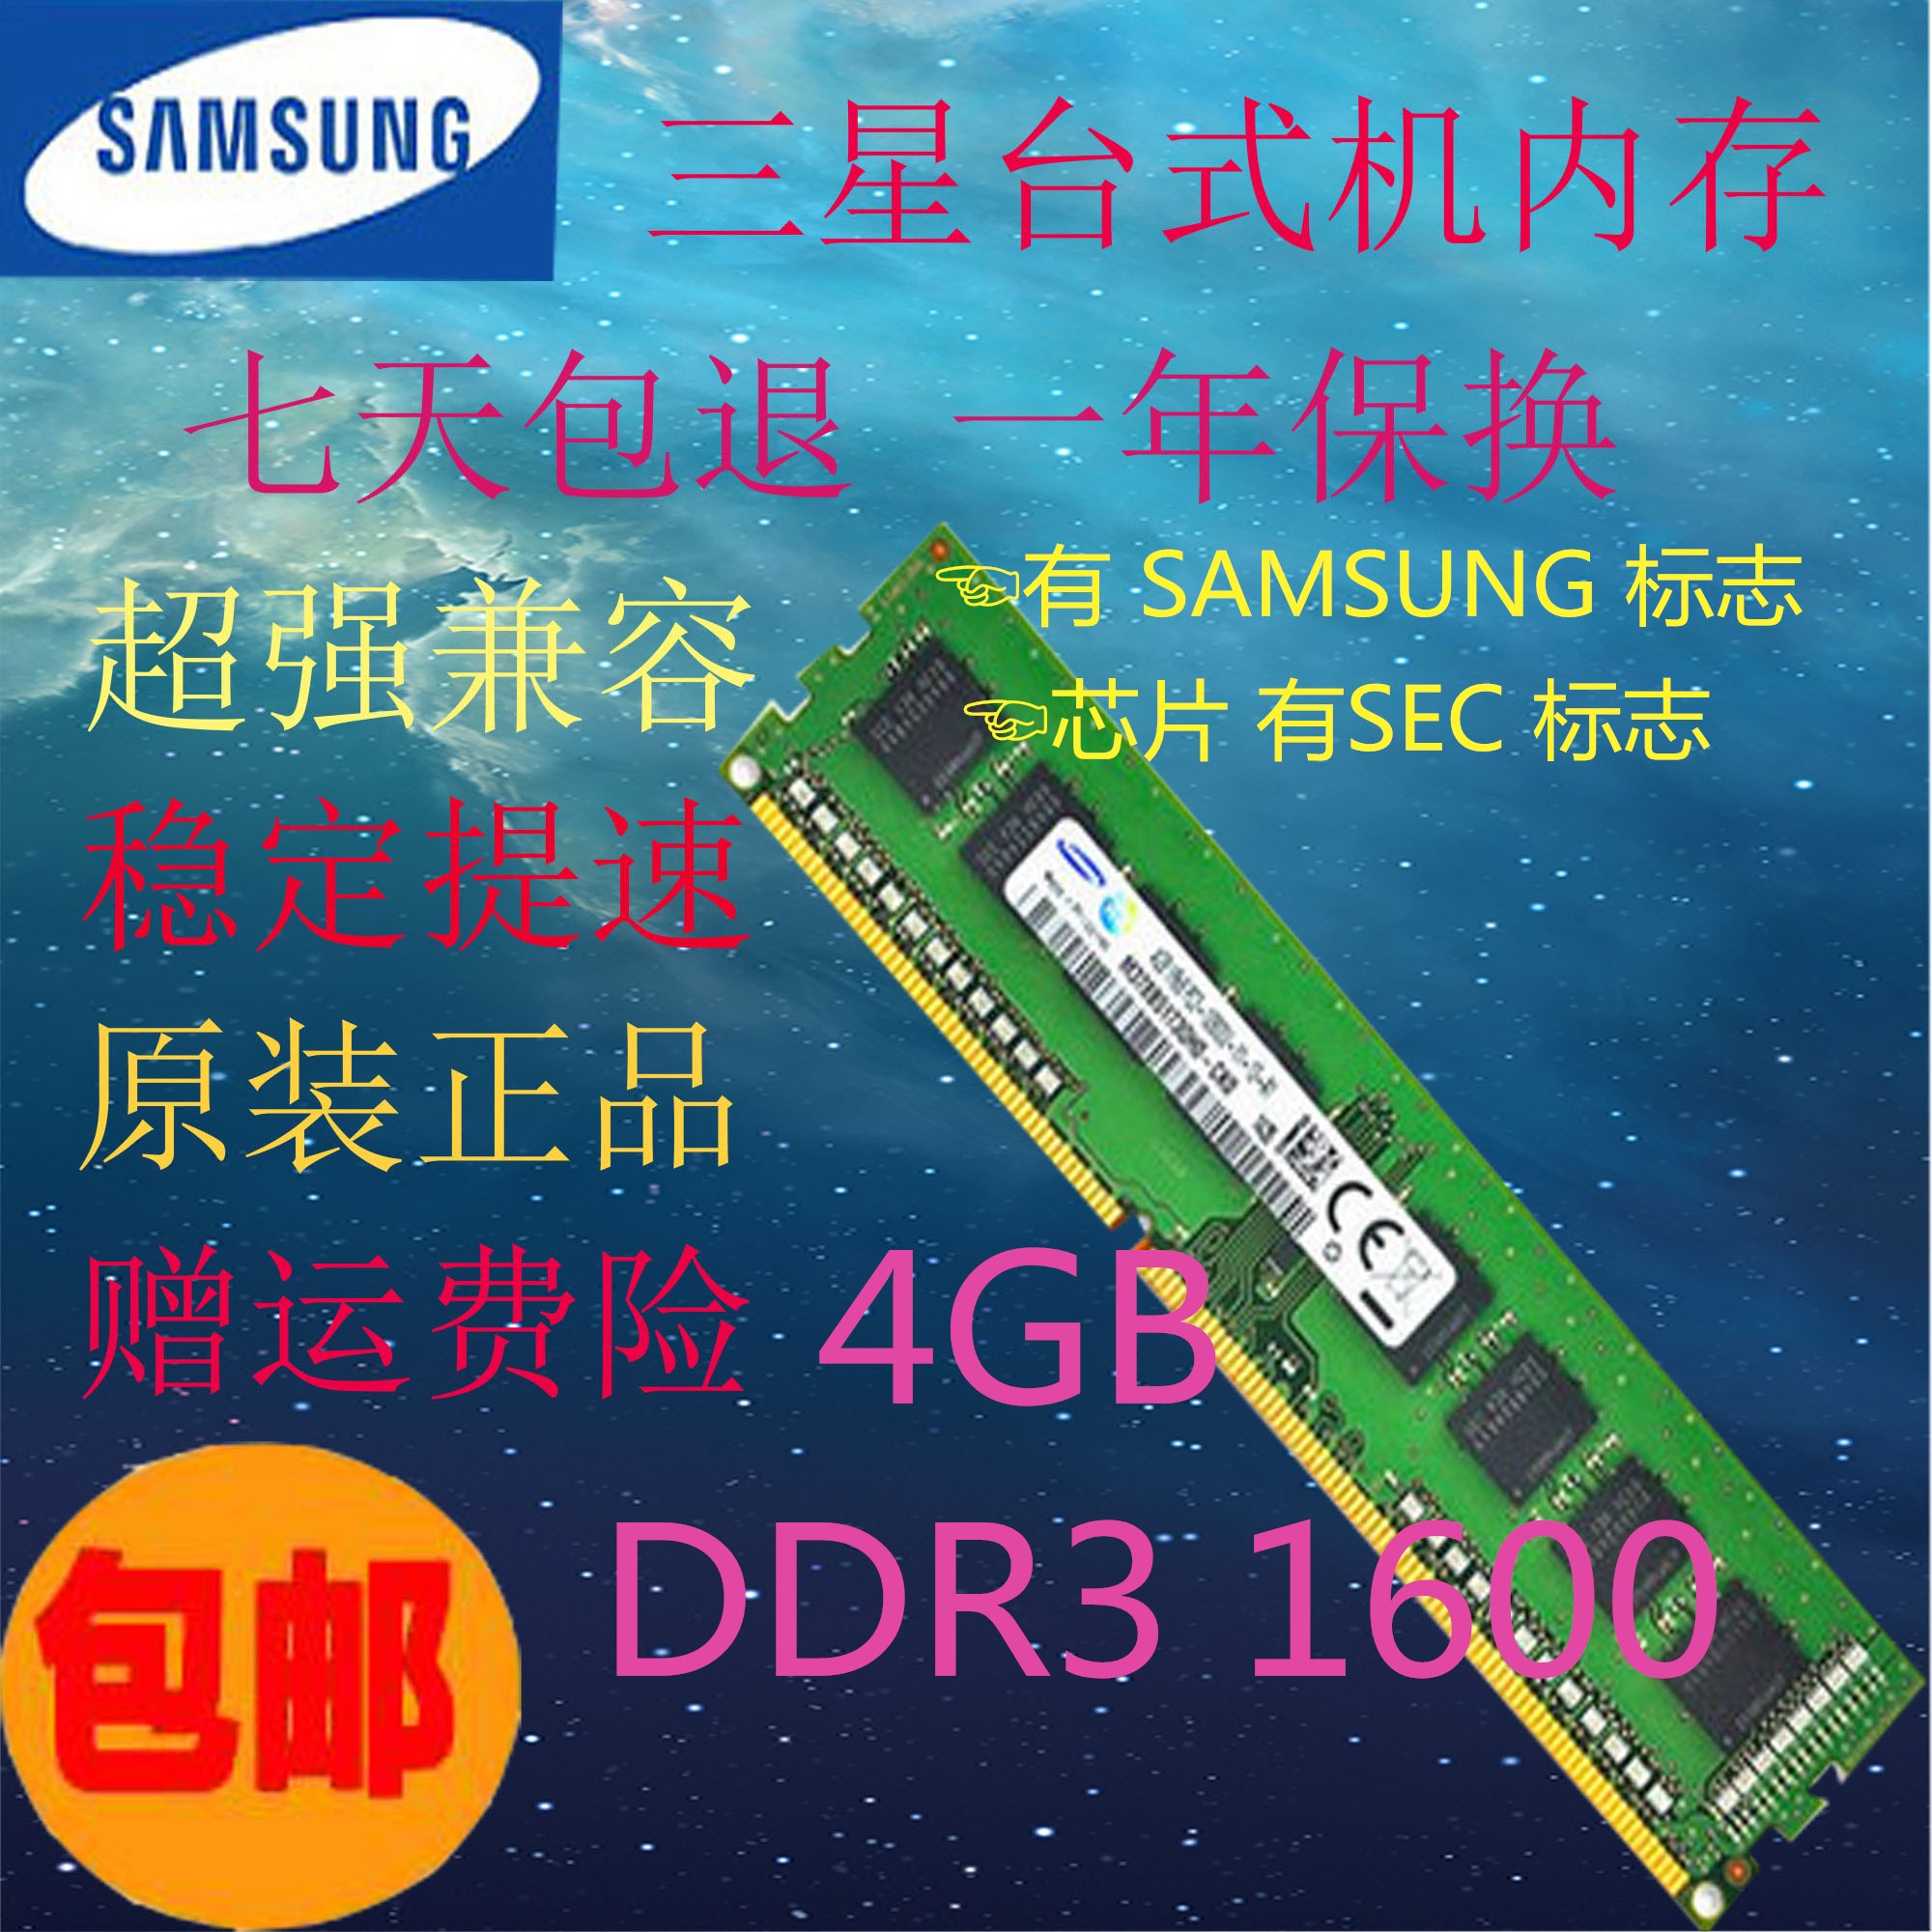 Samsung DDR3 16001 G2G4G 8G PC3-12800 desktop memory bar compatible 1333